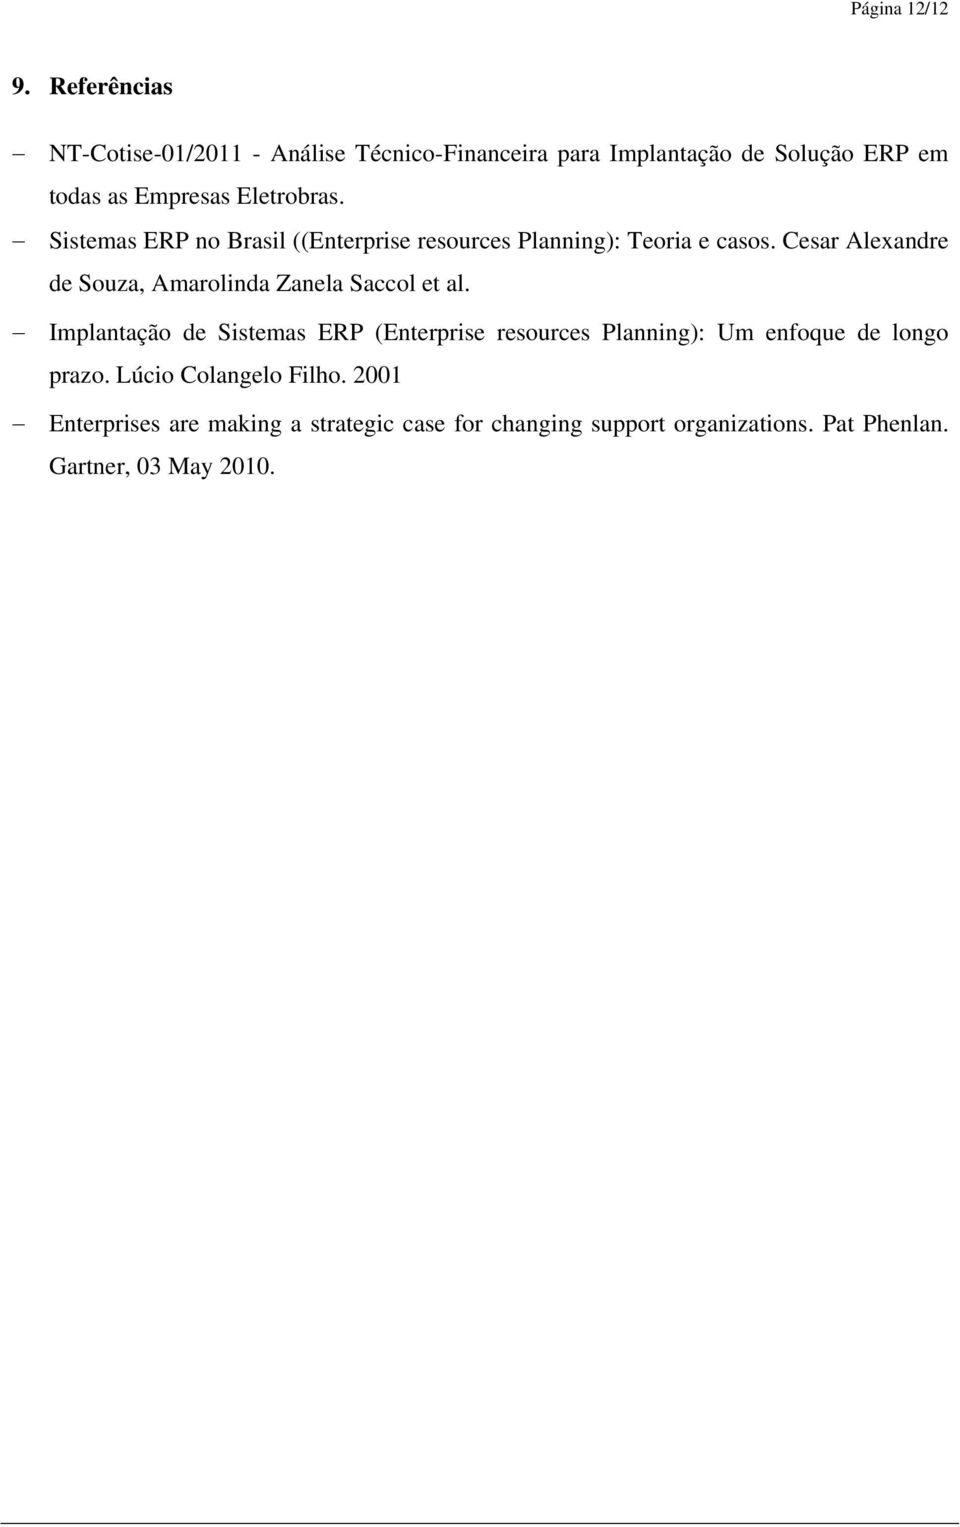 Sistemas ERP no Brasil ((Enterprise resources Planning): Teoria e casos.